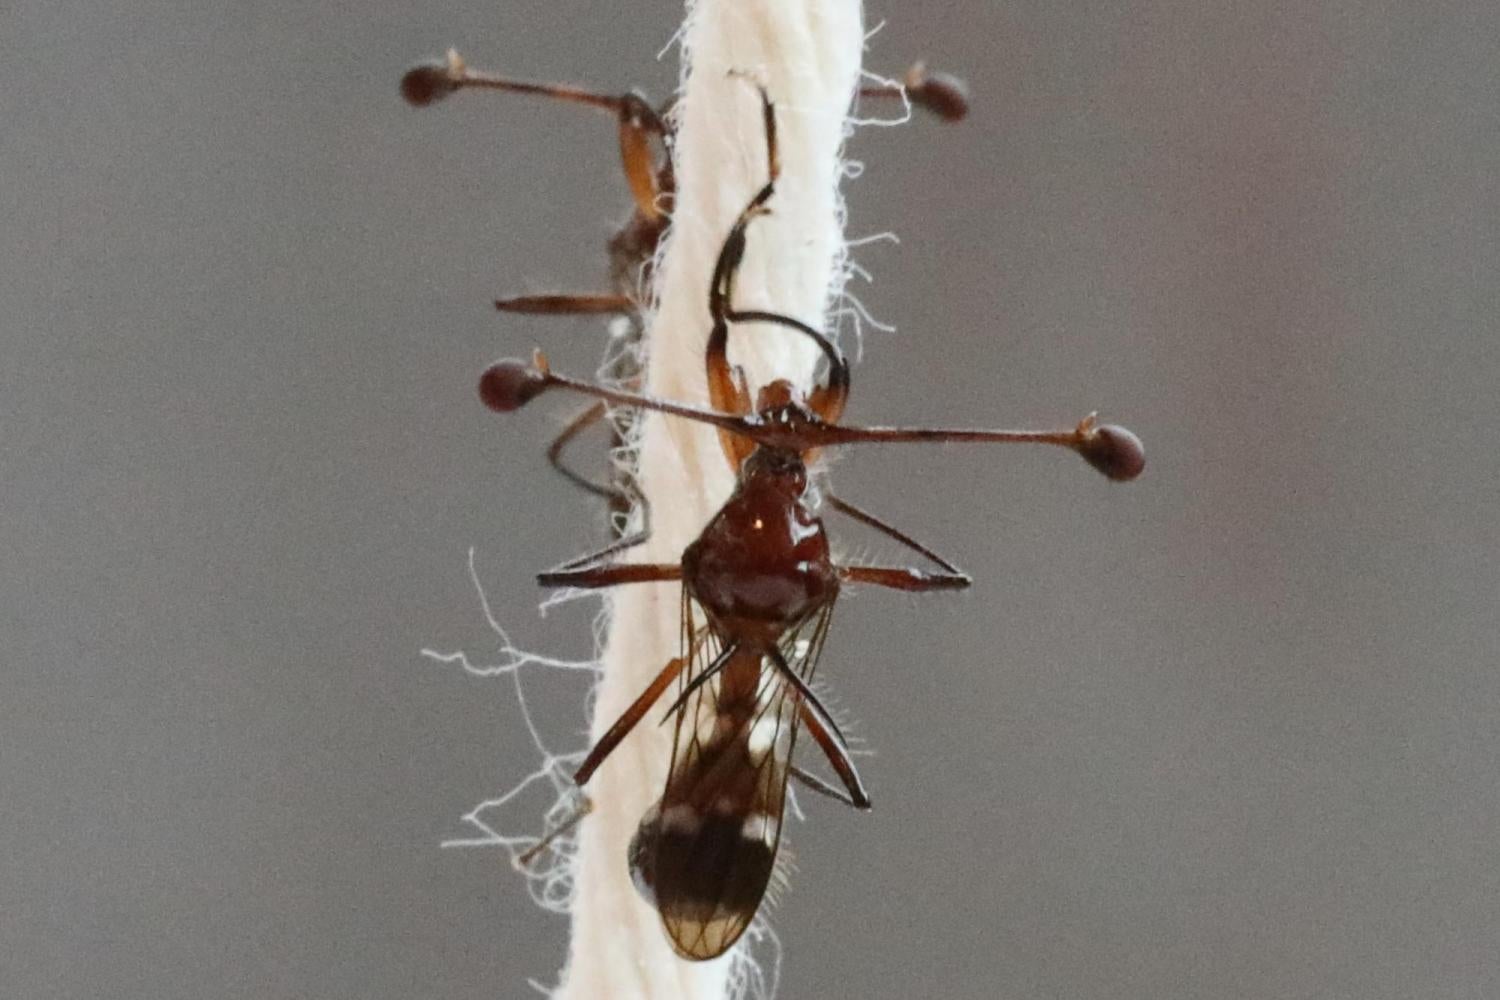 Stalk-eyed fly grooming